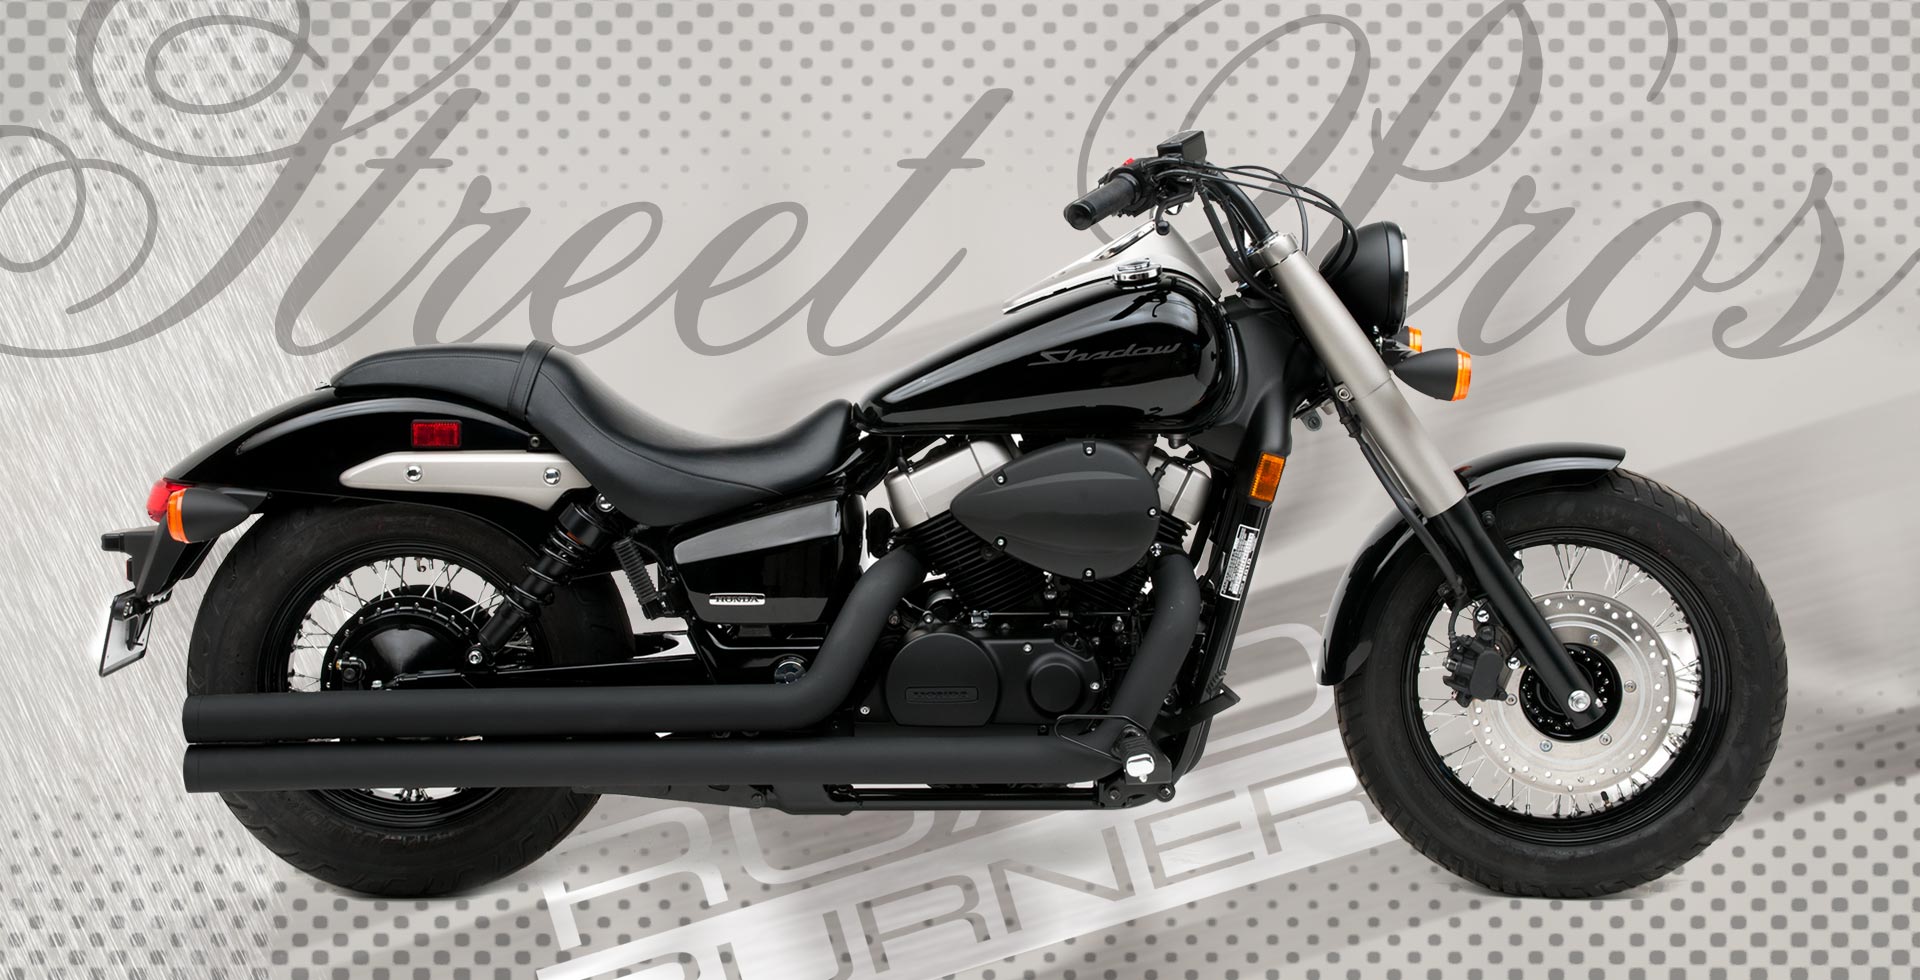 Обзор мотоцикла honda shadow (хонда шедоу) vt 750c